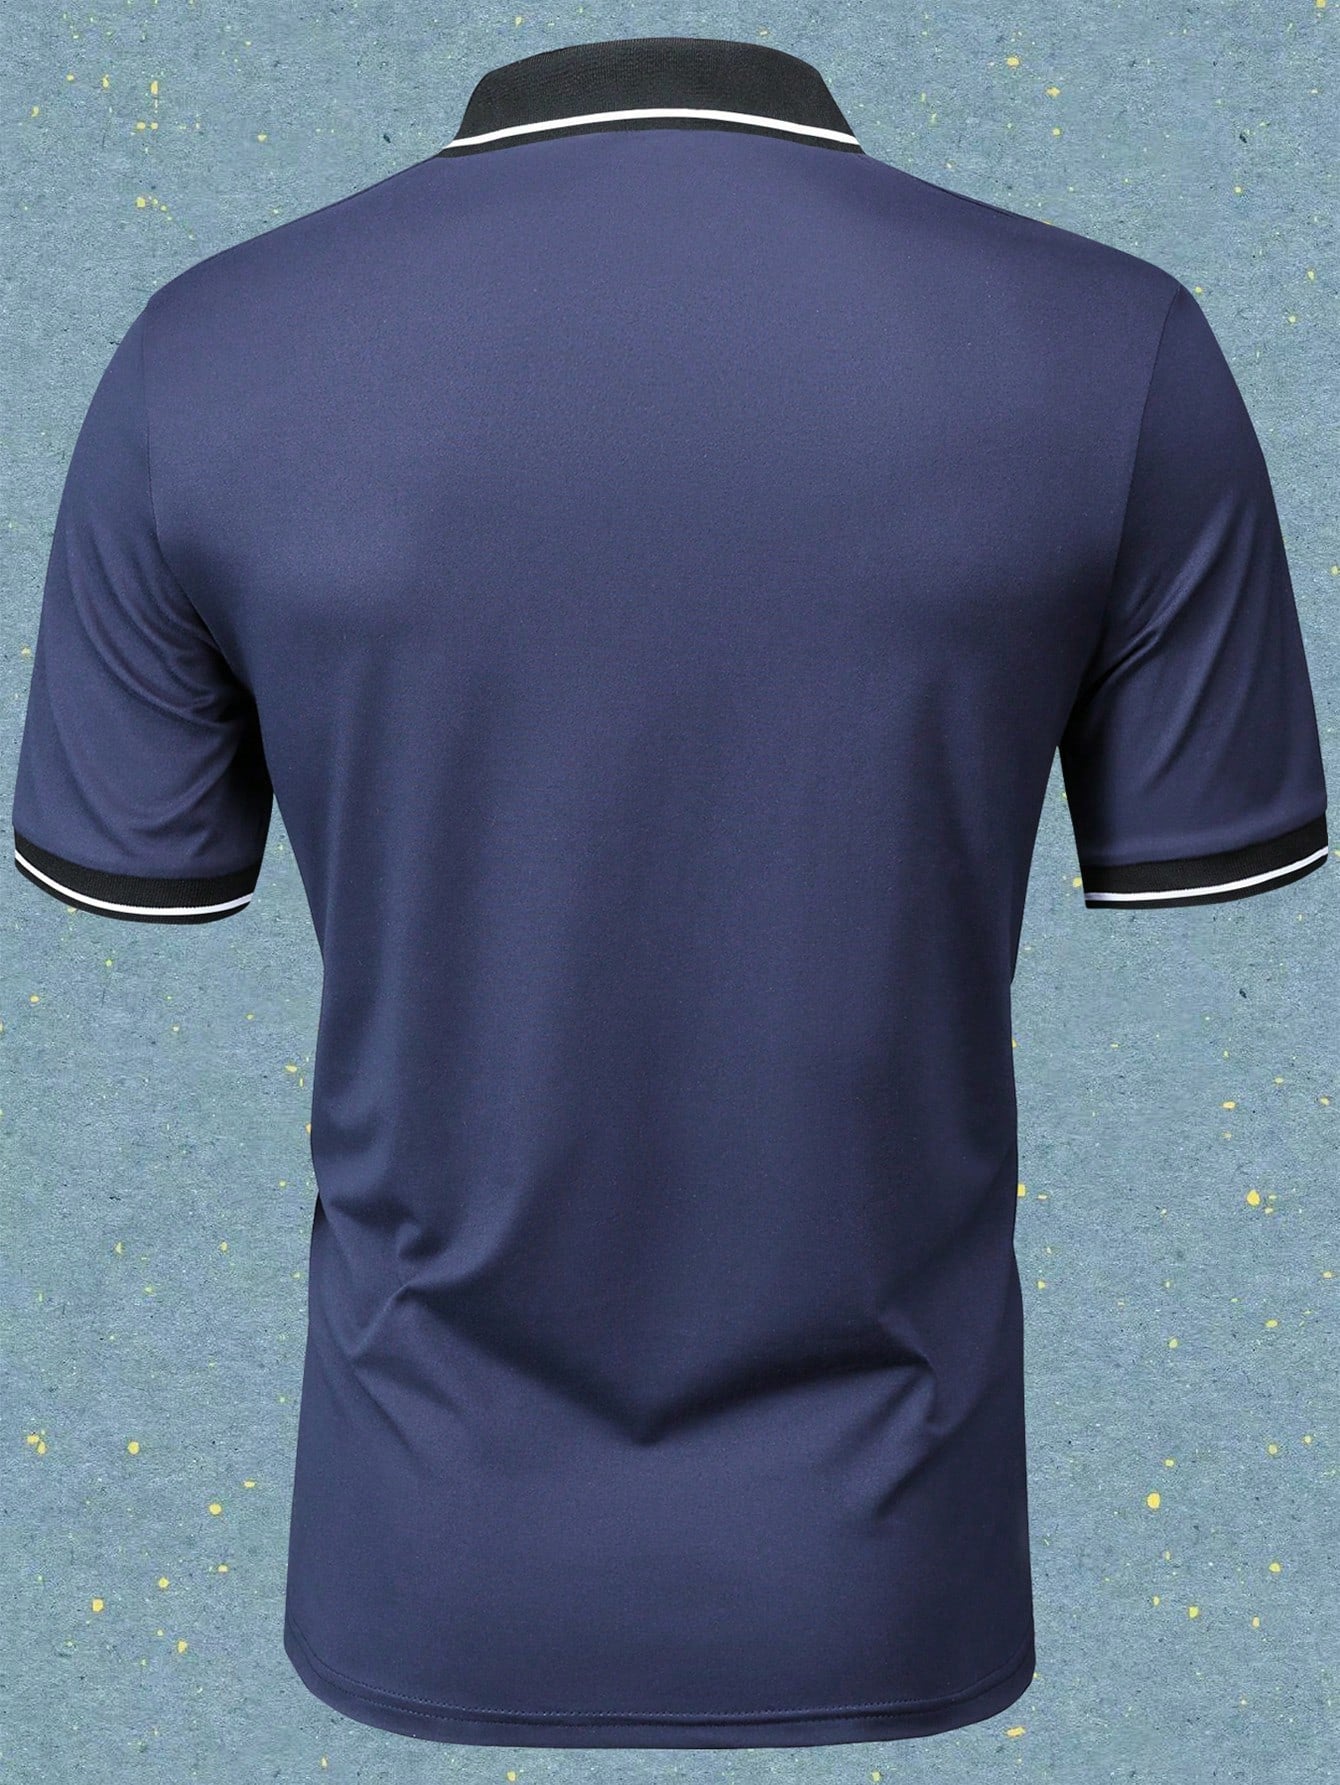 Men's Short Sleeve Polo Shirt. Outdoor Casual Sportswear Top